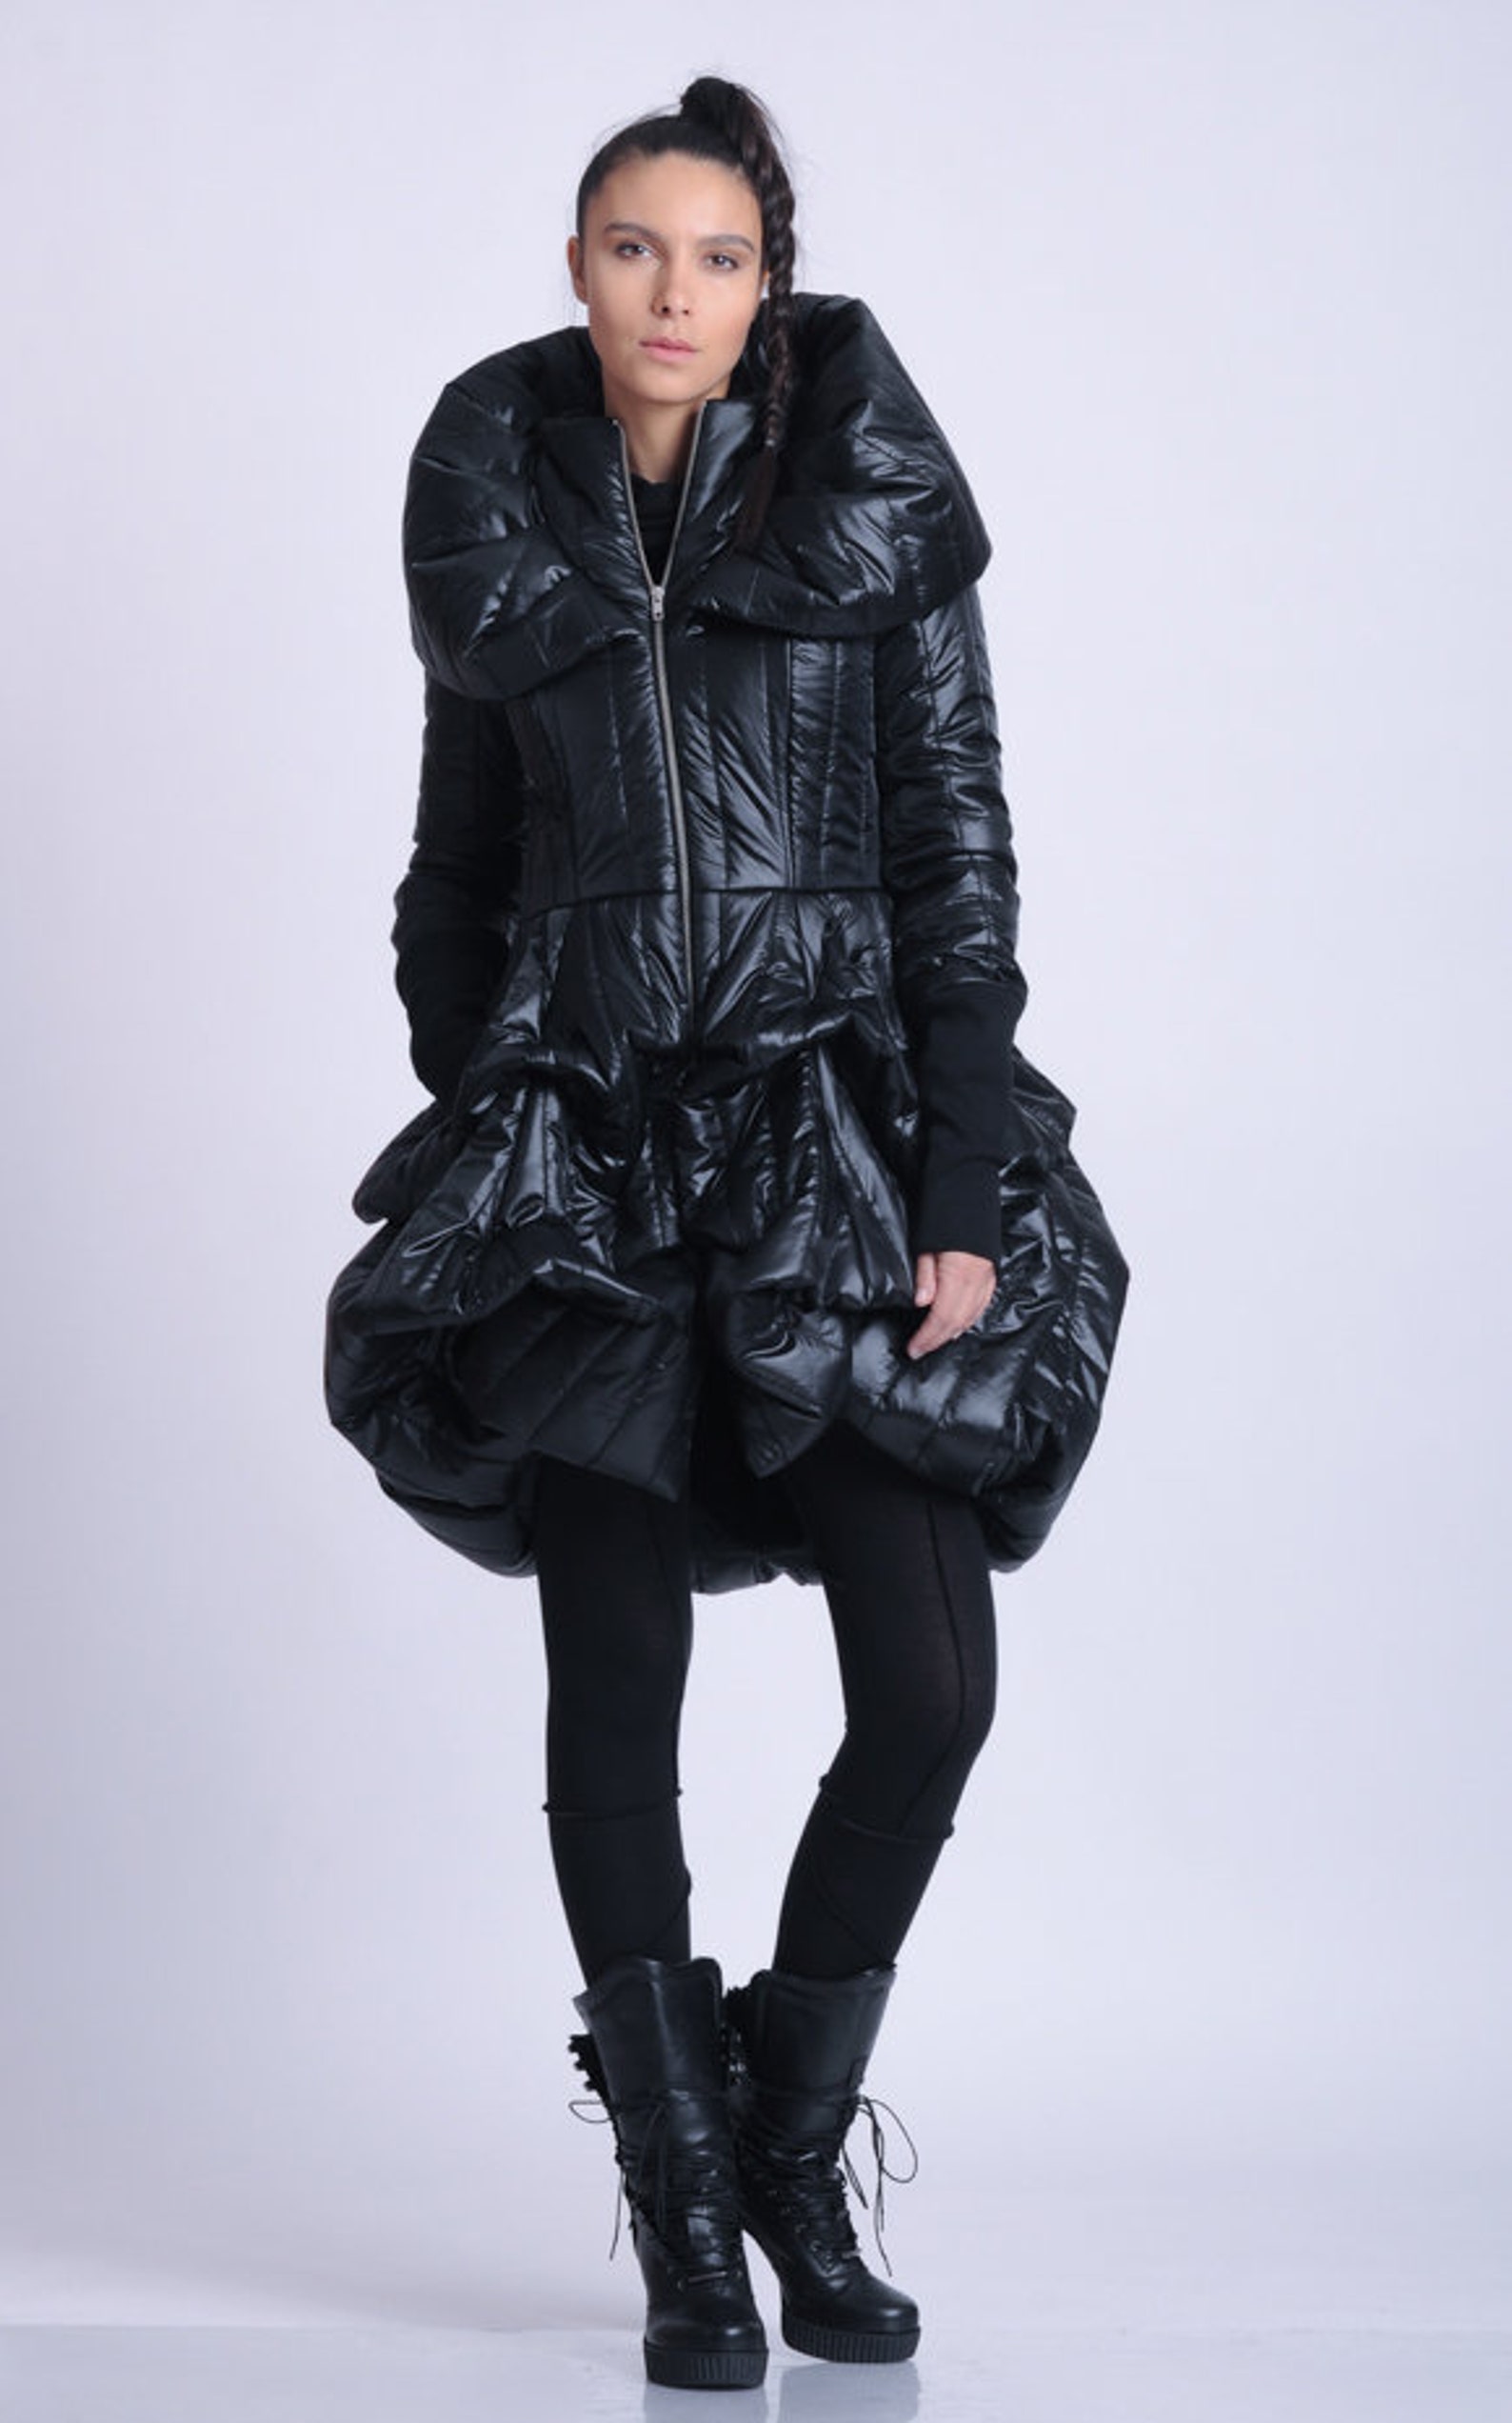 Extravagant Puffy Coat/Black Dress Coat/Oversize Collar | Etsy